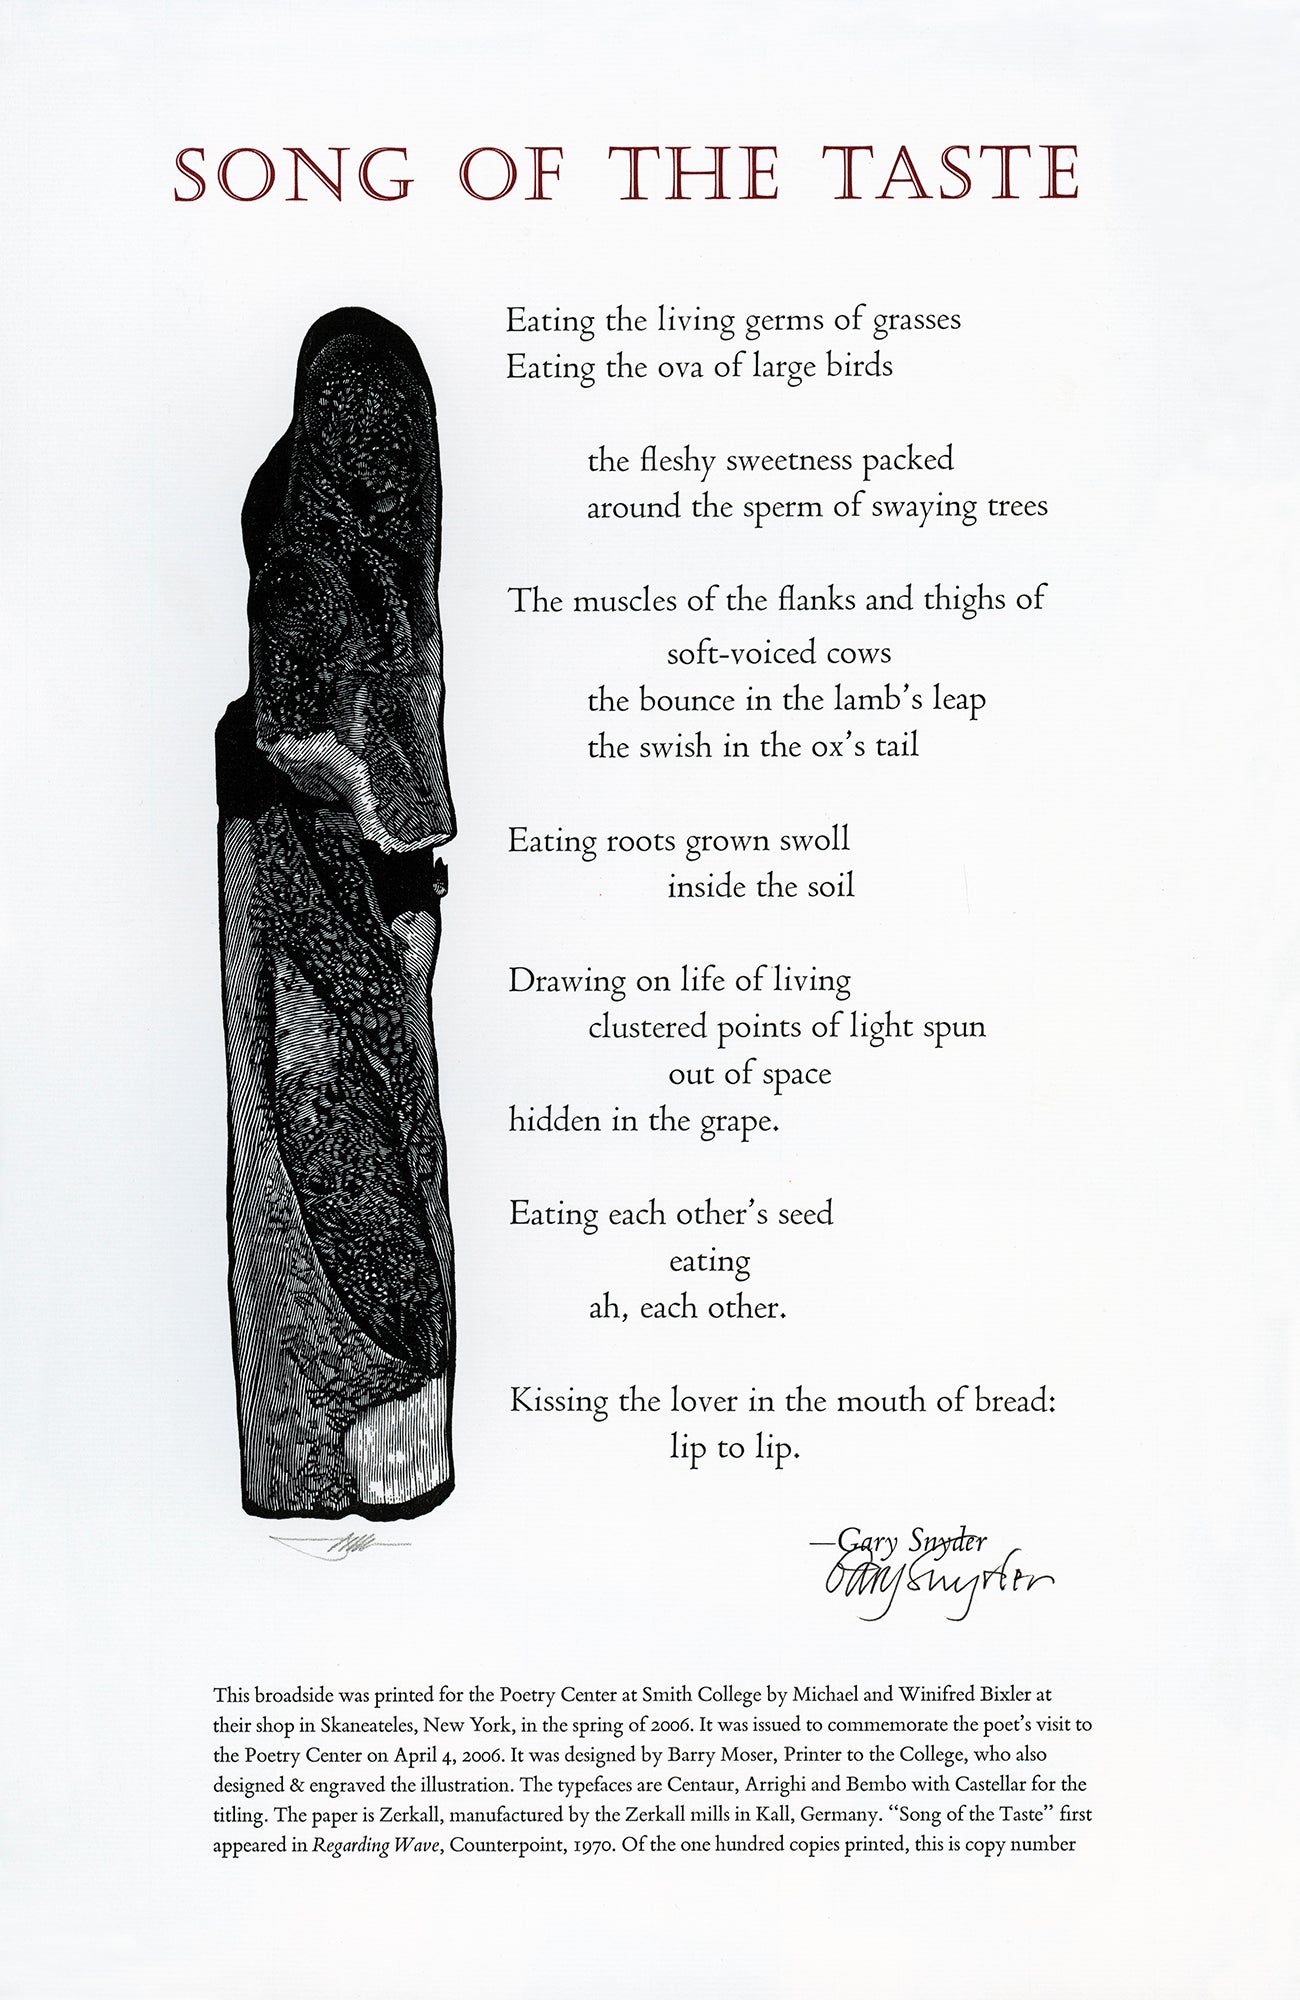 Gary Snyder "Song of the Taste" / Barry Moser Broadside